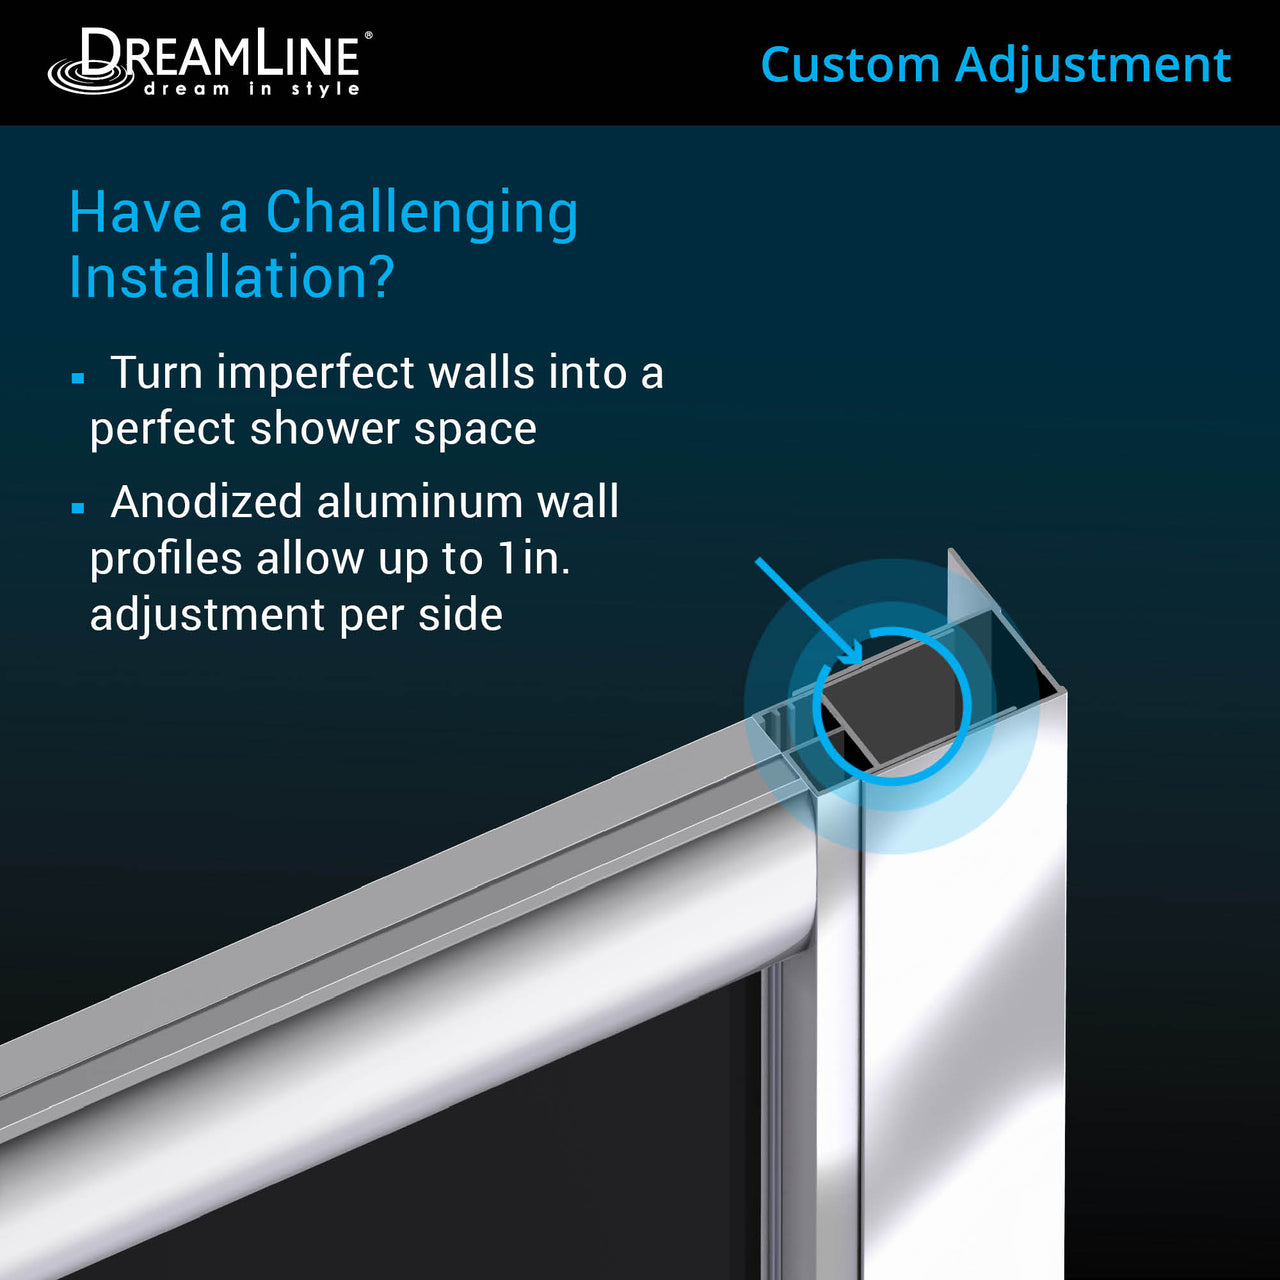 DreamLine Prime 36 in. x 36 in. x 74 3/4 in. Corner Sliding Shower Enclosure and SlimLine Shower Base Kit, Frosted Glass - BNGBath